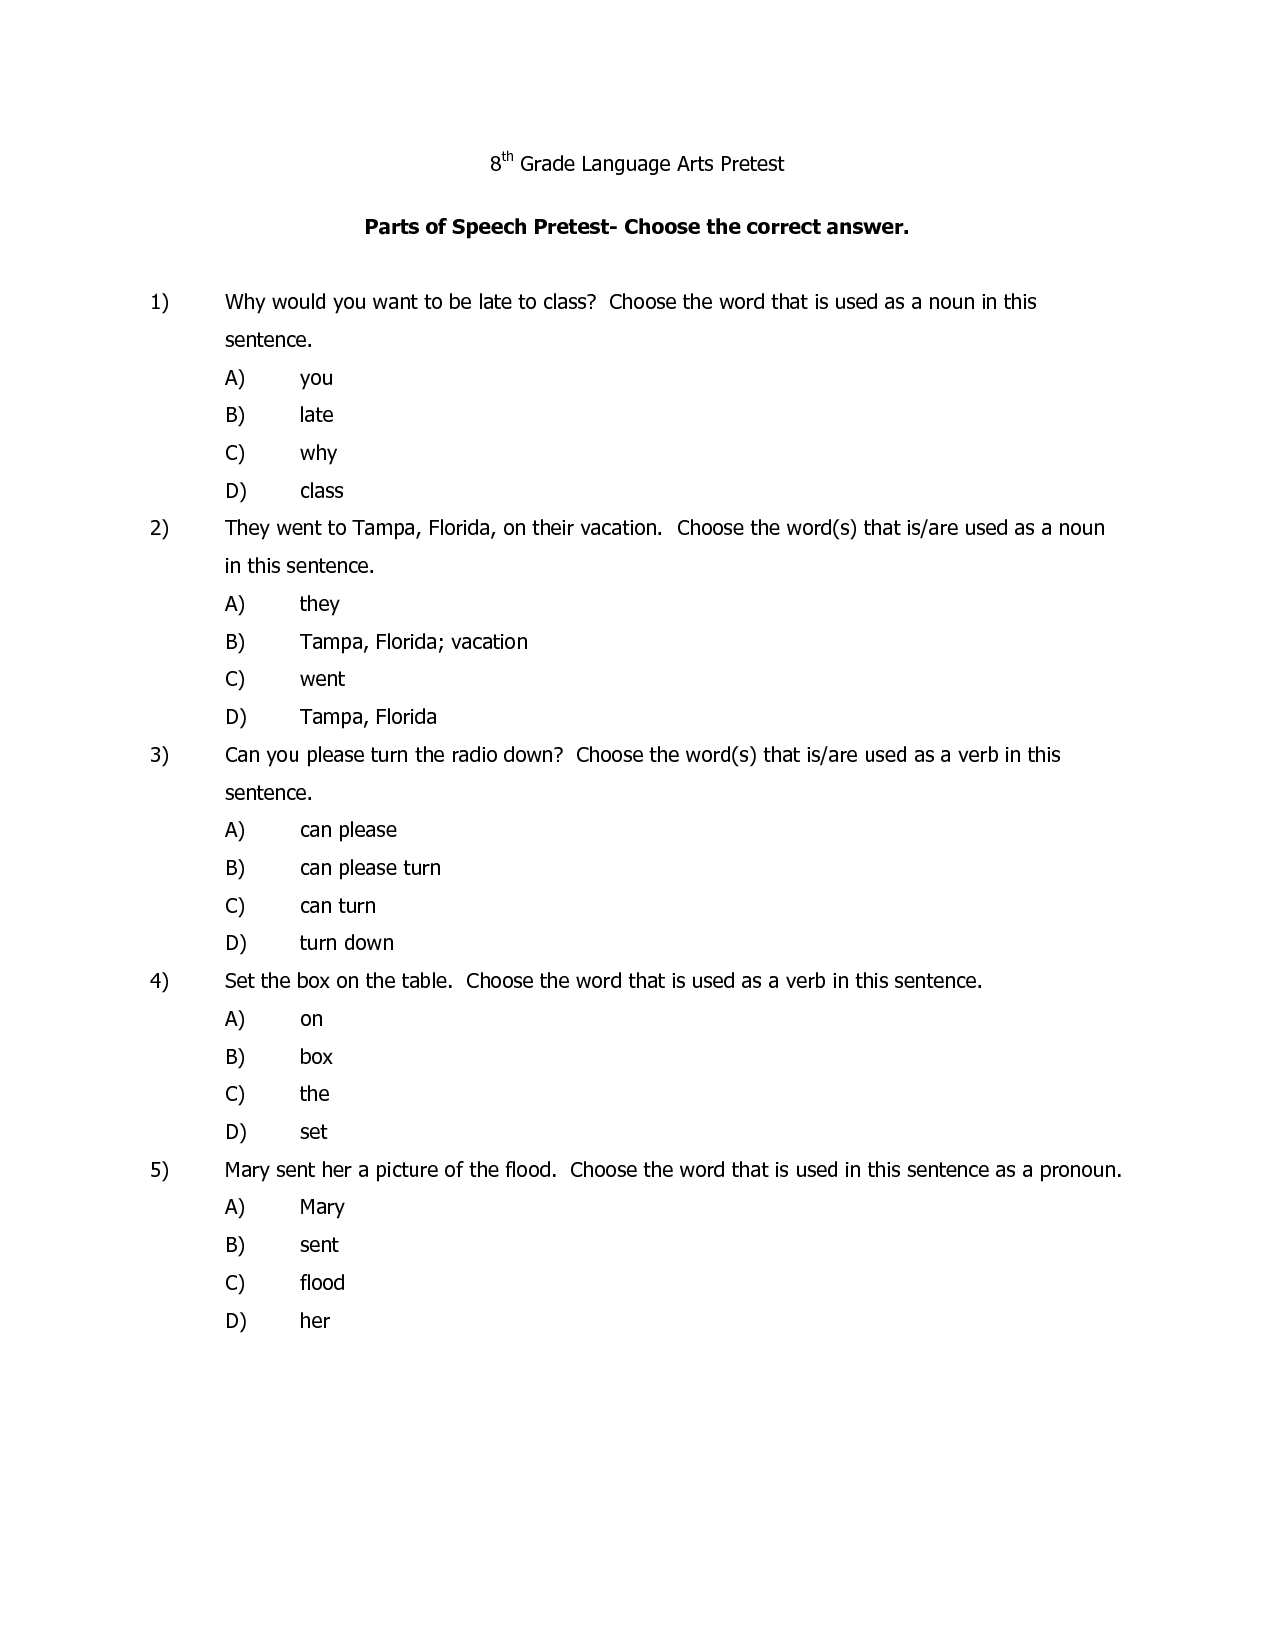 17-best-images-of-grammar-worksheets-8th-8th-grade-grammar-worksheets-4th-grade-grammar